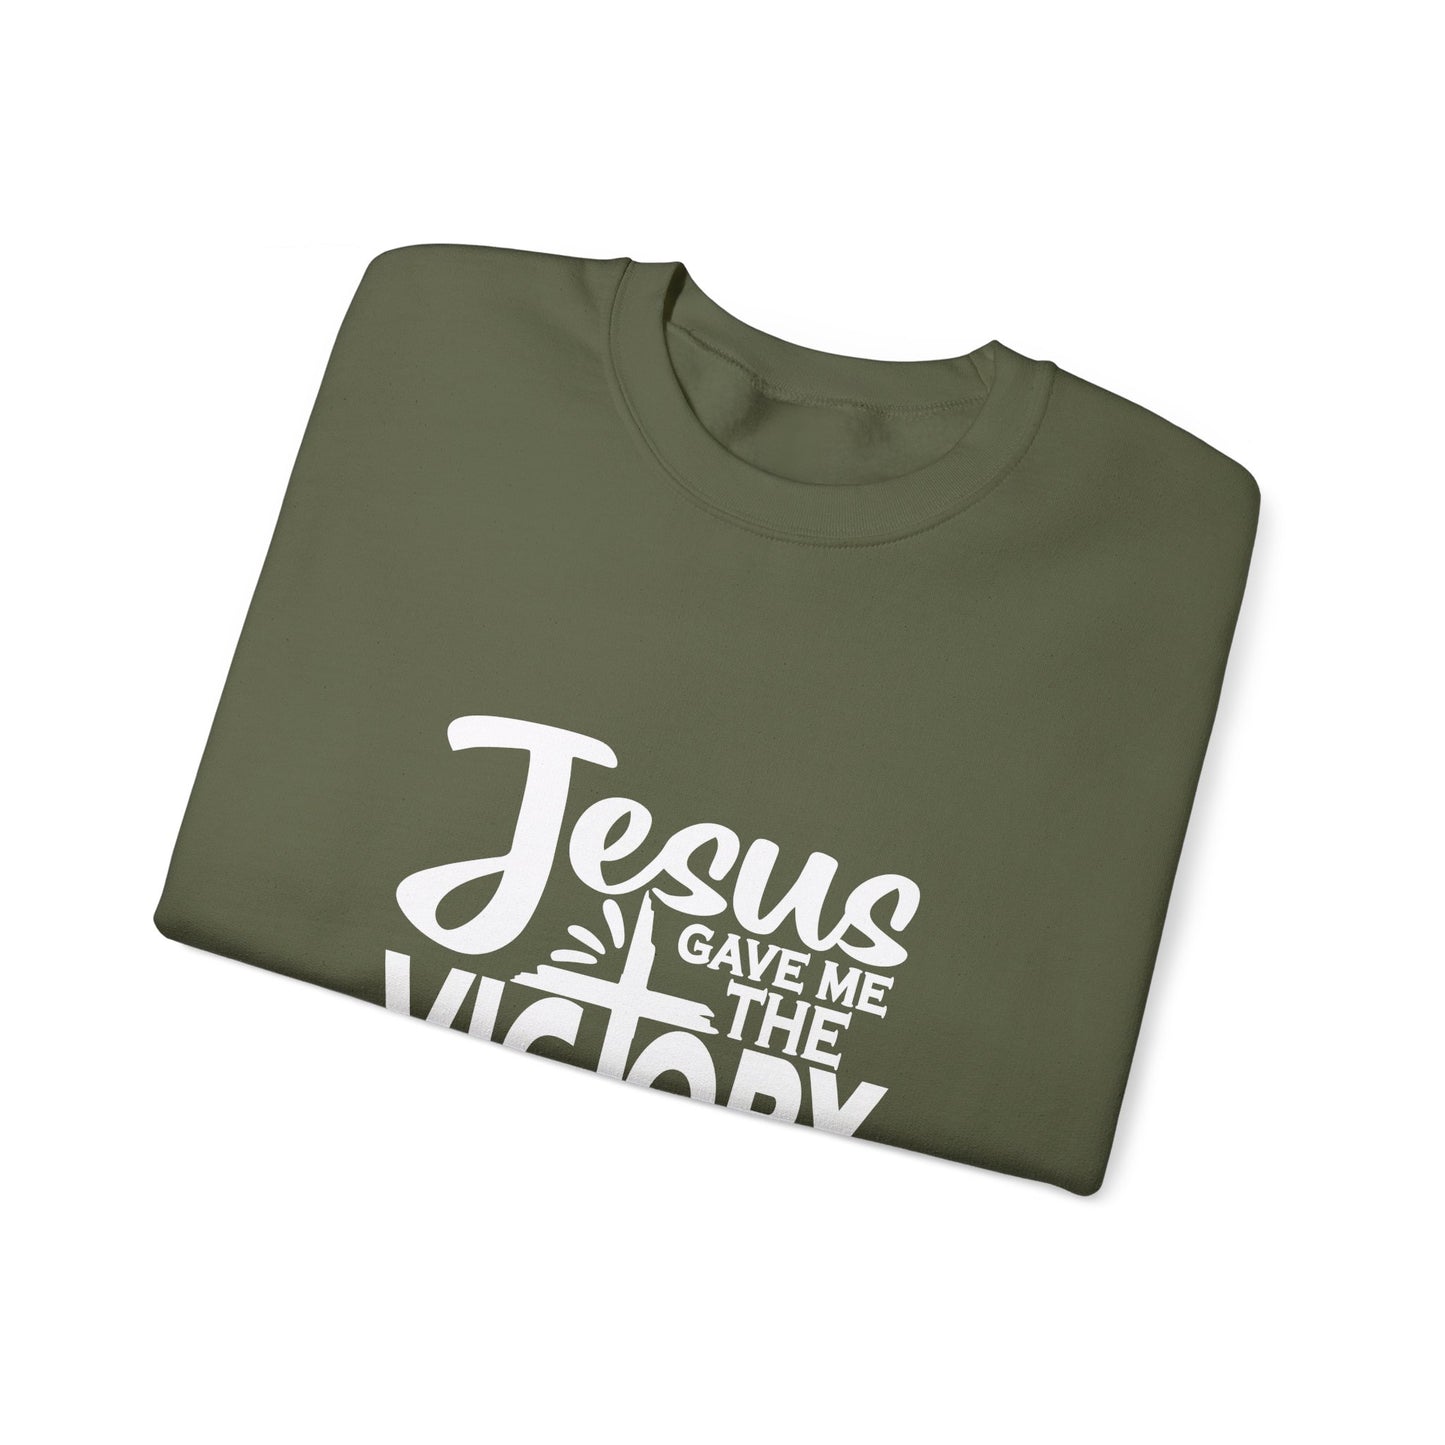 Jesus Gave Me The Victory Unisex Heavy Blend™ Crewneck Christian Sweatshirt